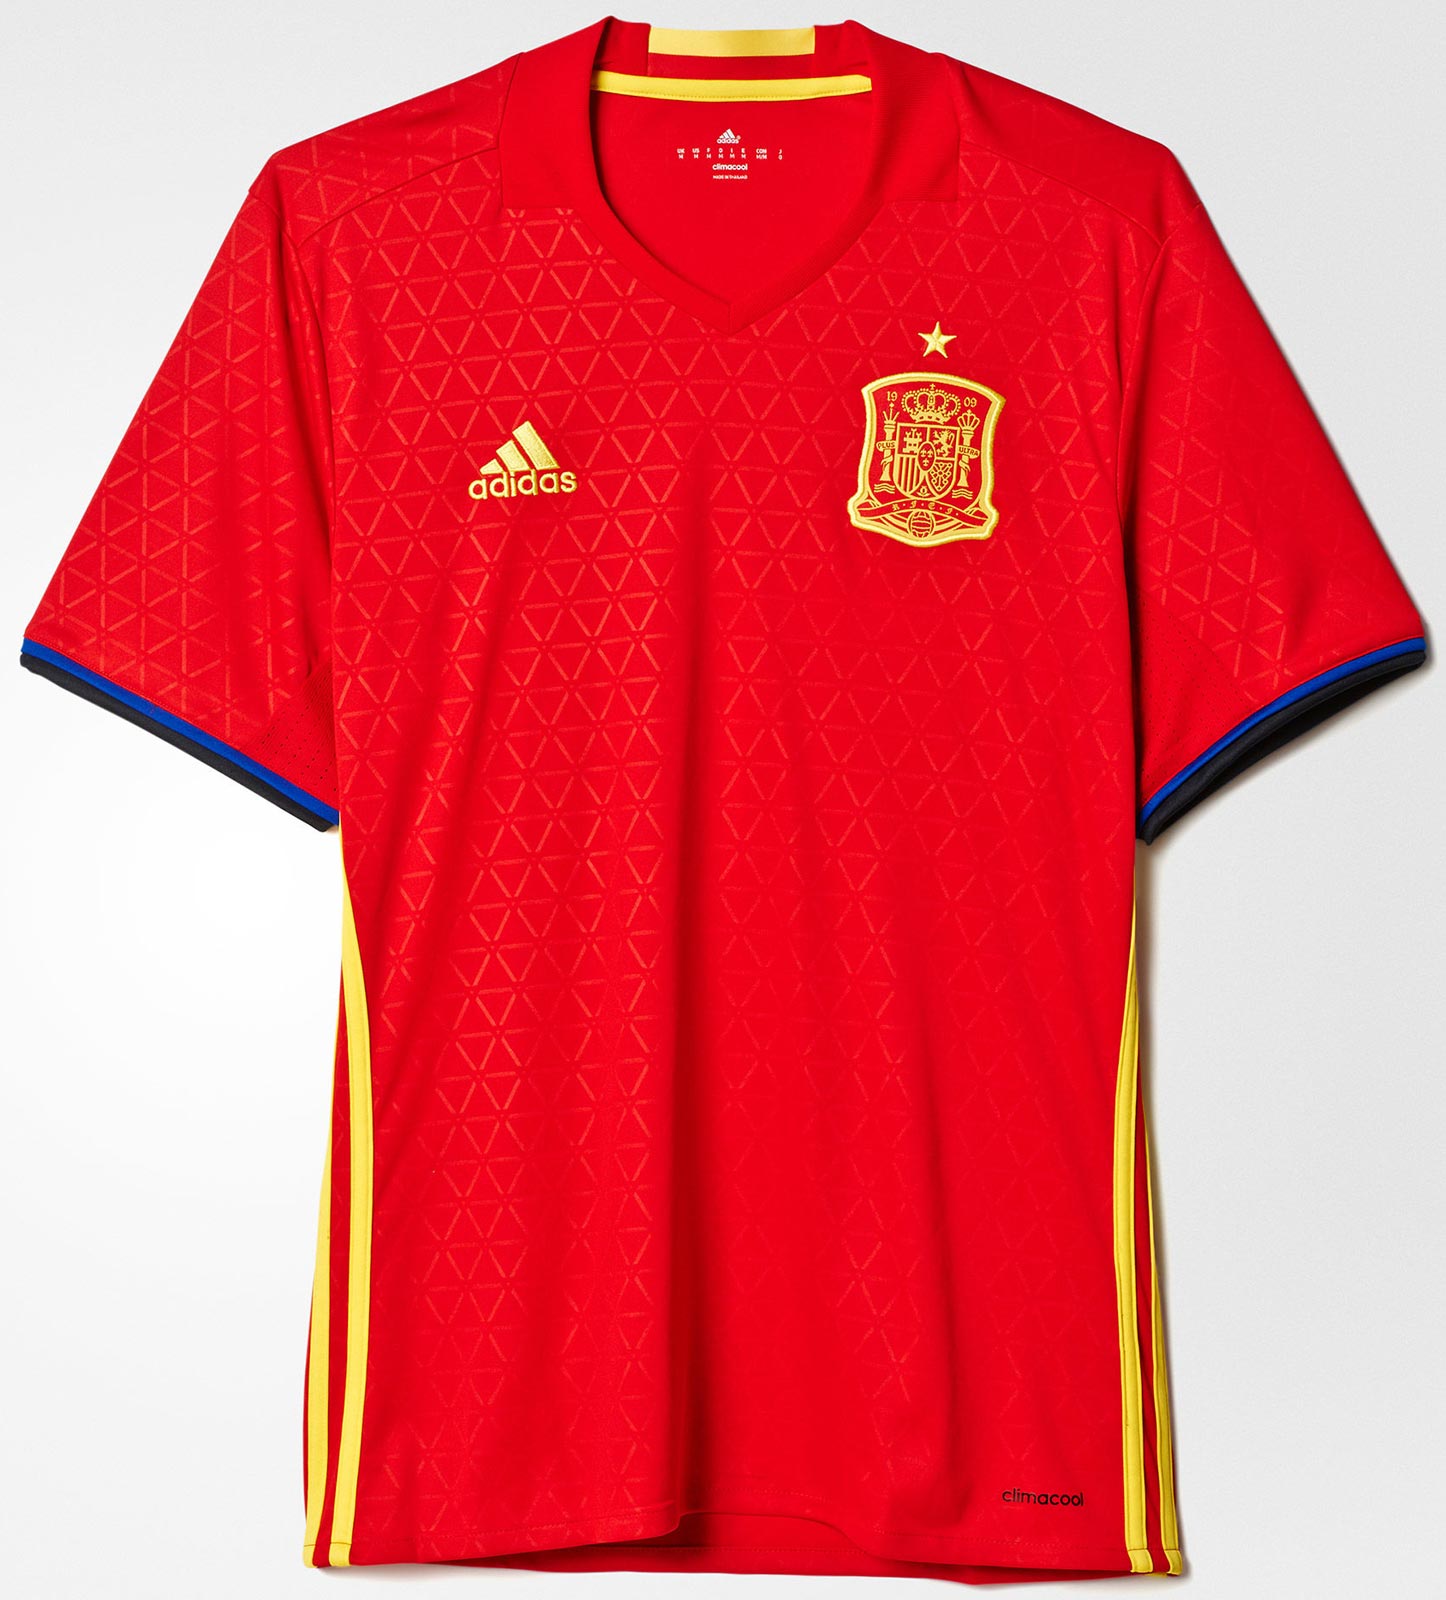 Adidas Spain Euro 16 Home Jersey